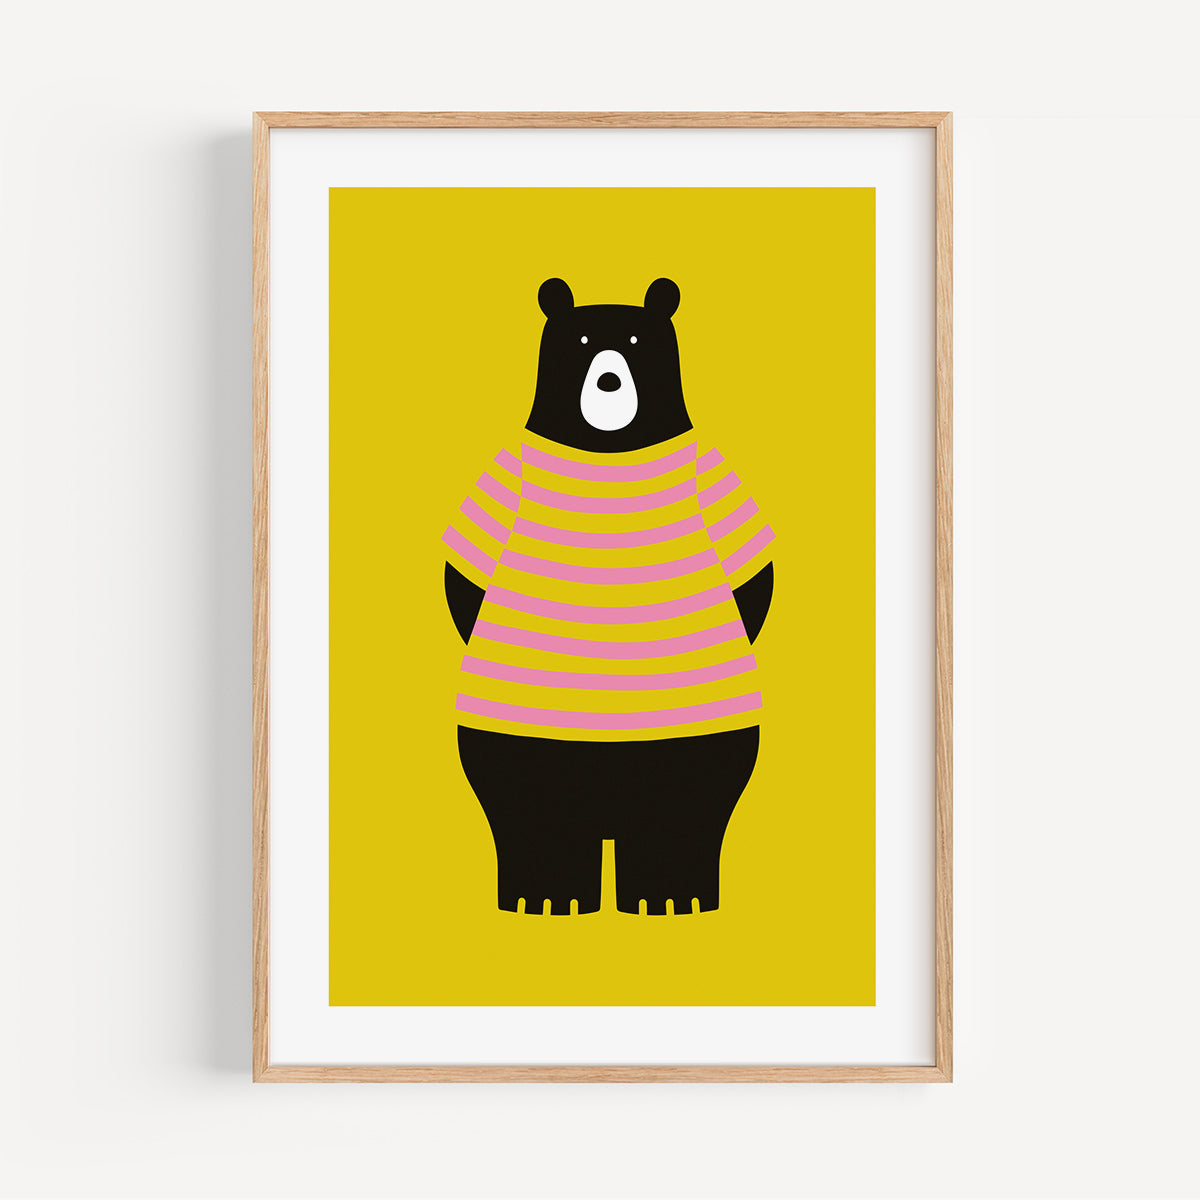 YELLOW BEAR - Colourful A4 giclée art print